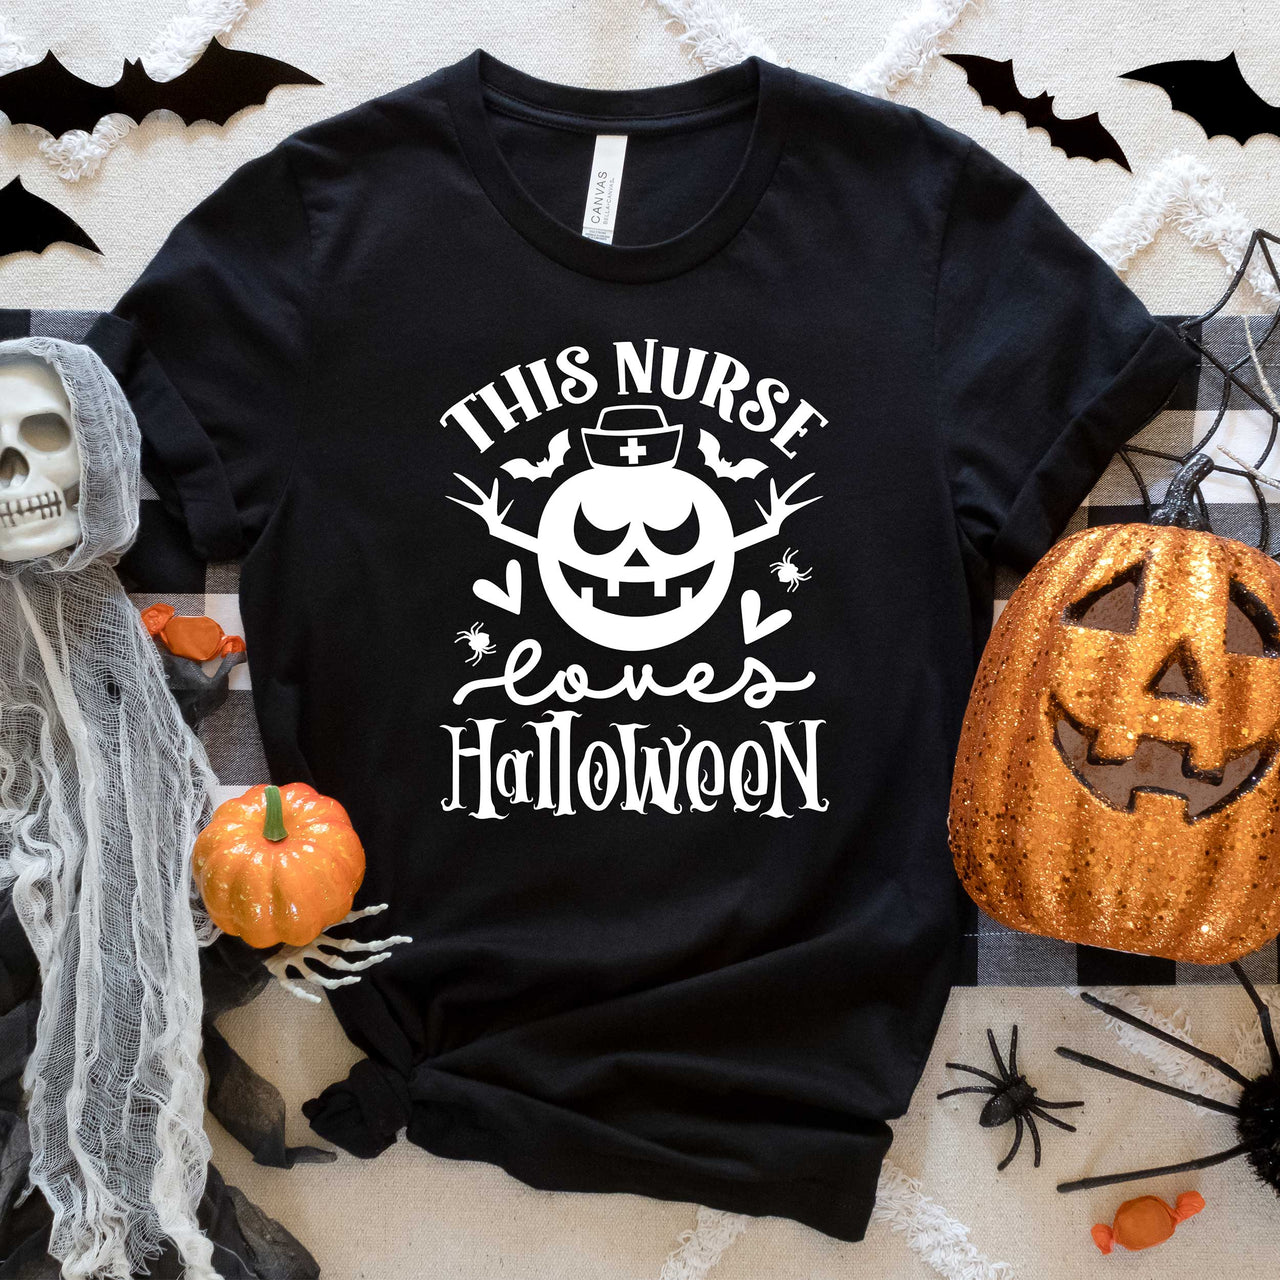 This Nurse Loves Halloween T-Shirt